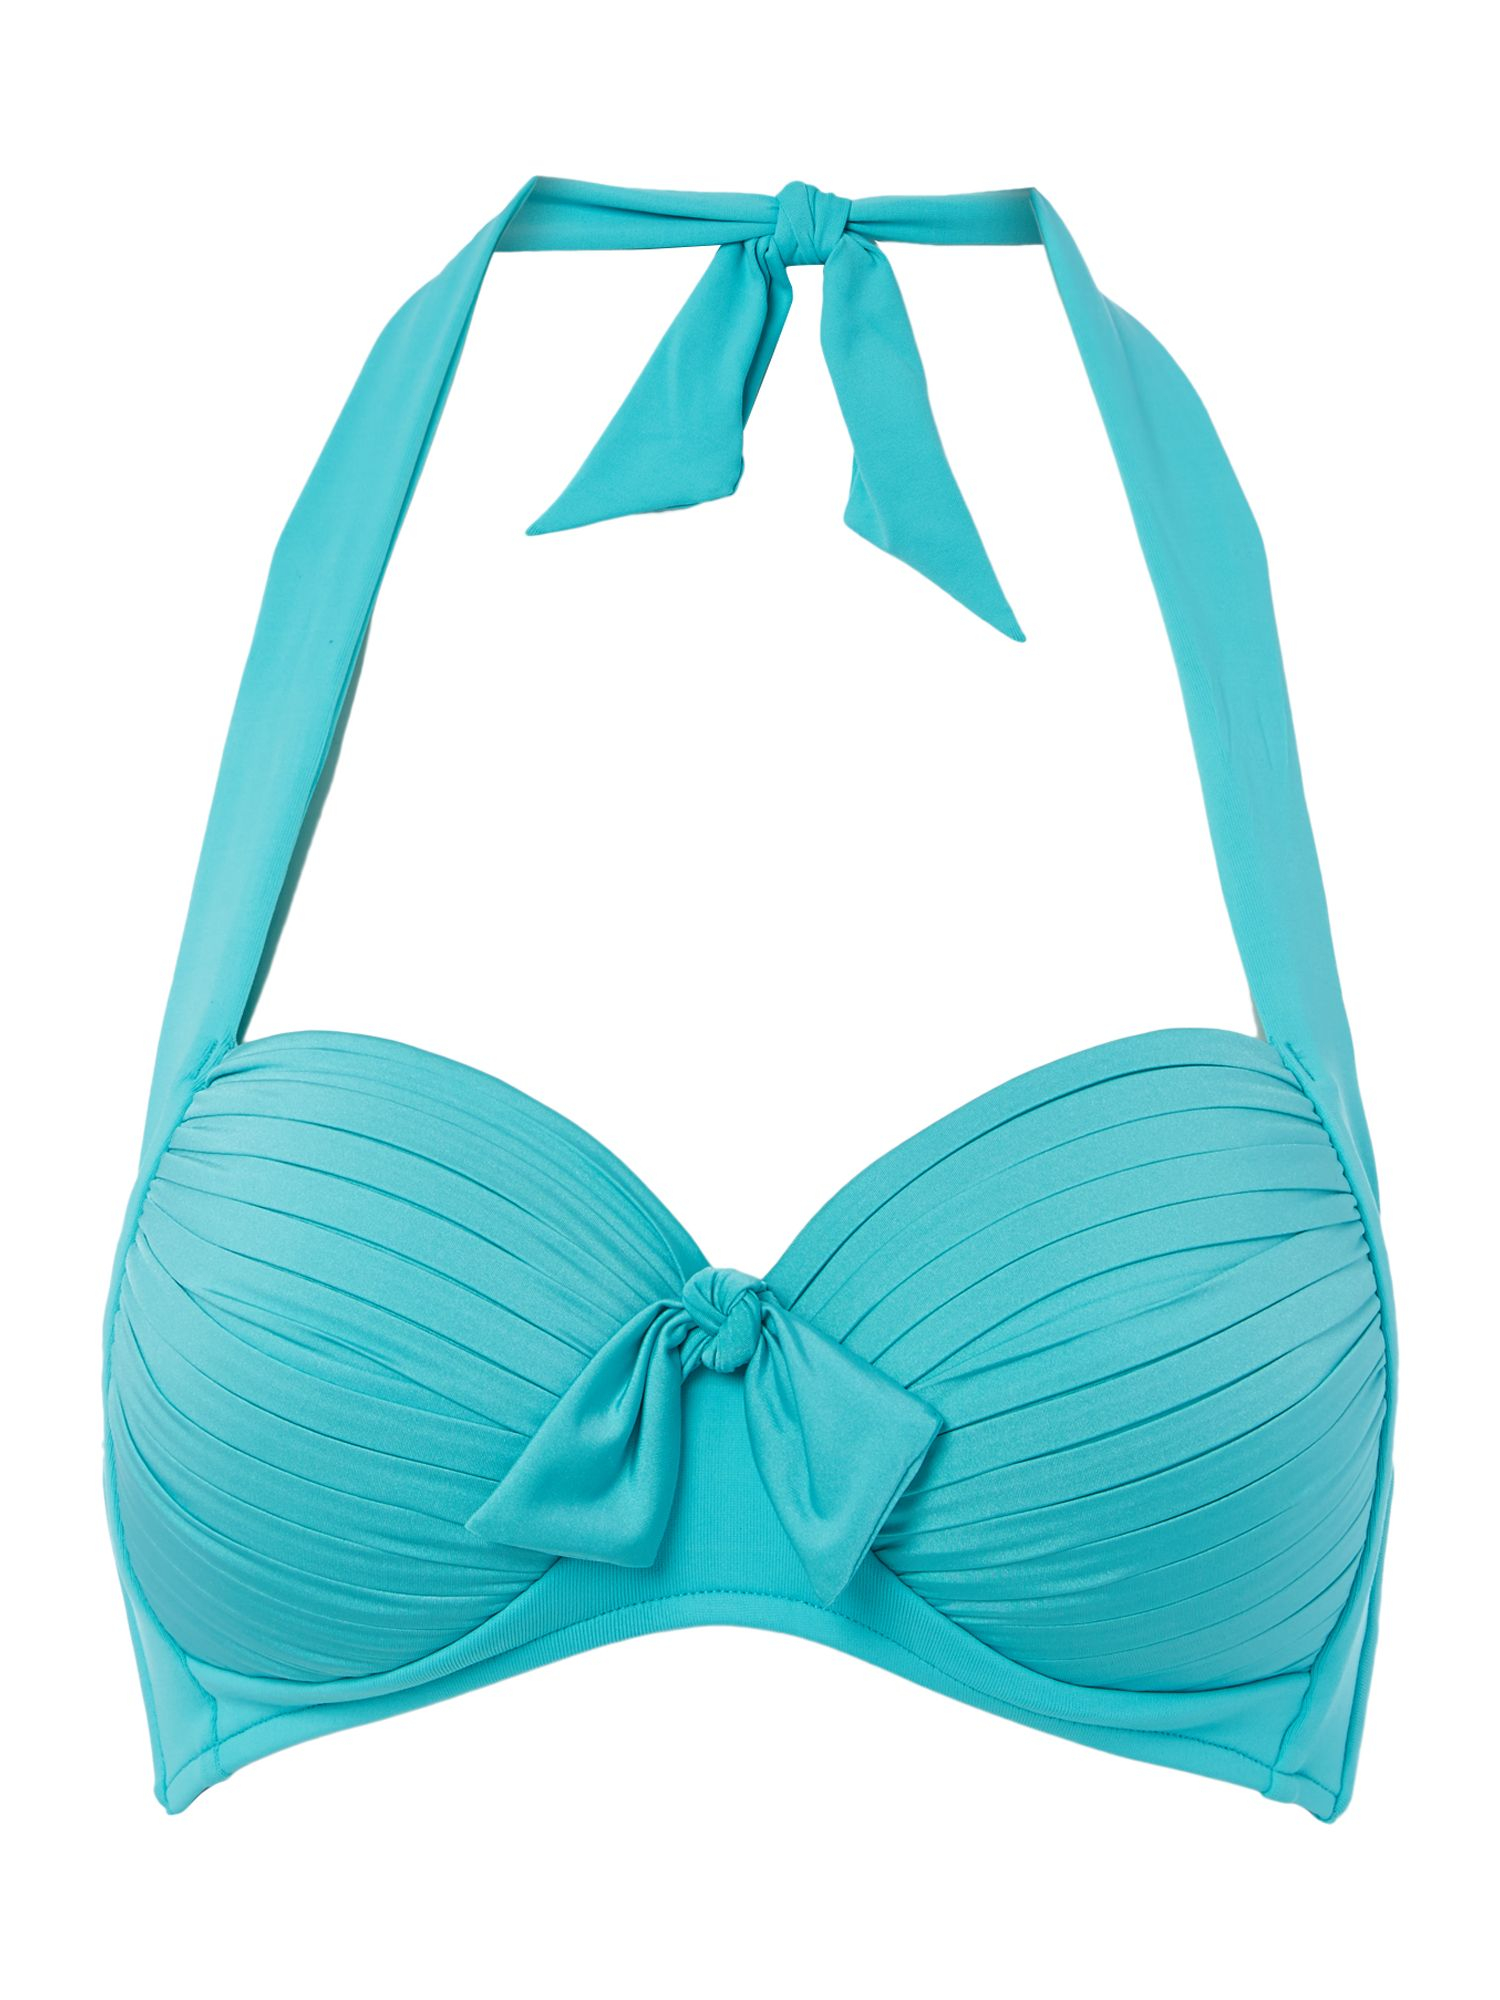 Seafolly Soft Cup Halter Bikini Top in Blue | Lyst